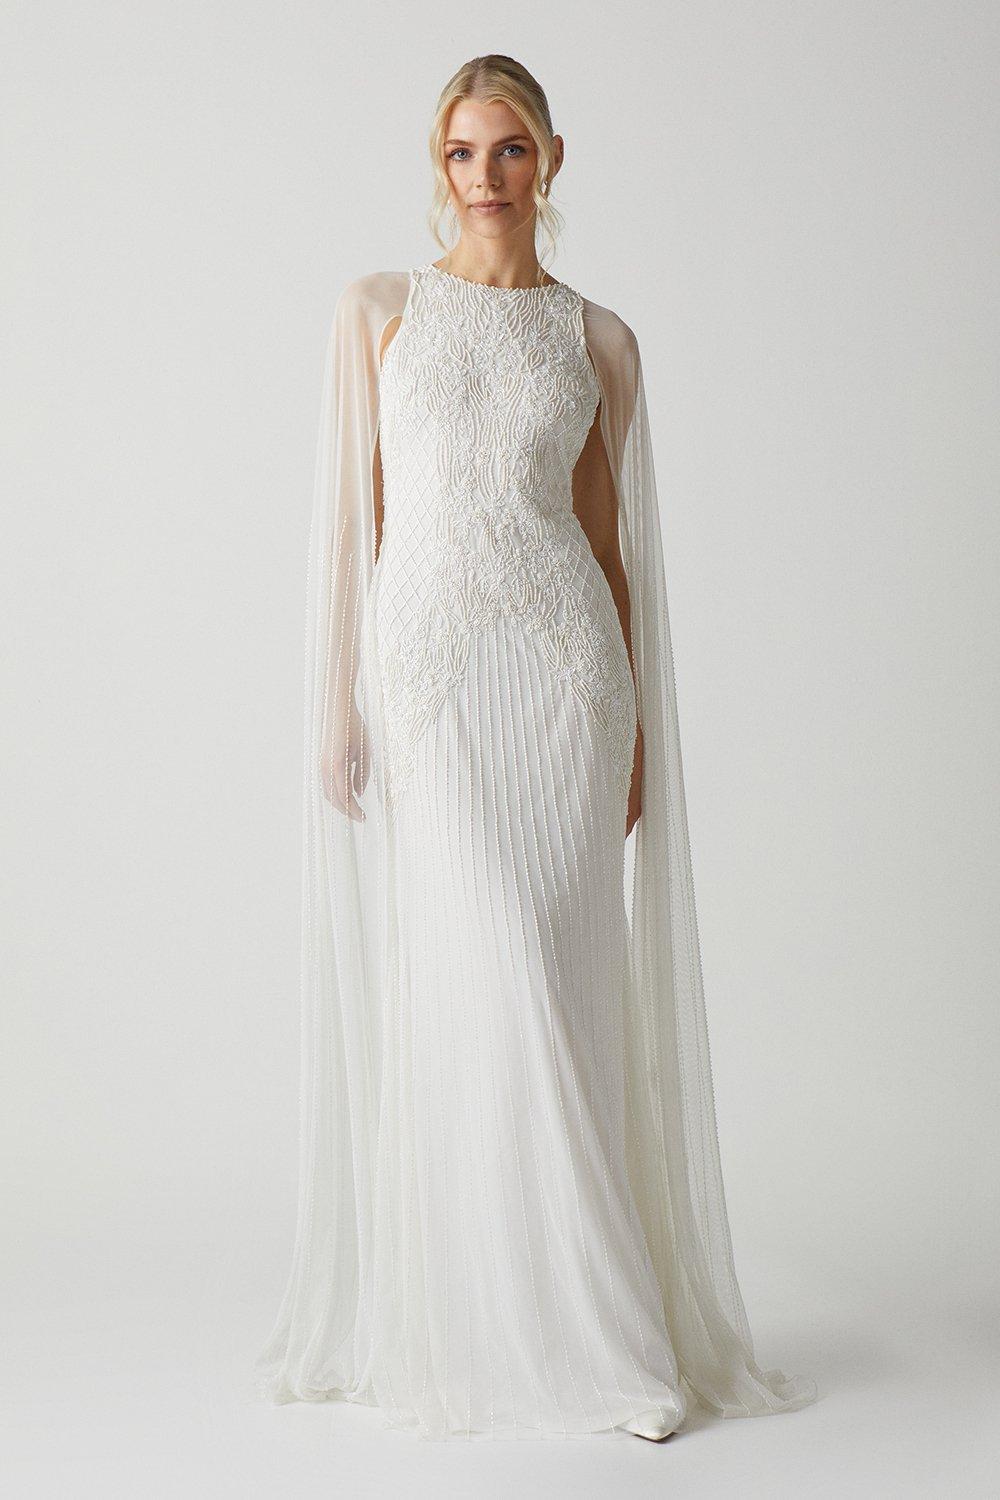 Premium Embellished Wedding Dress With Cape Sleeves - Ivory